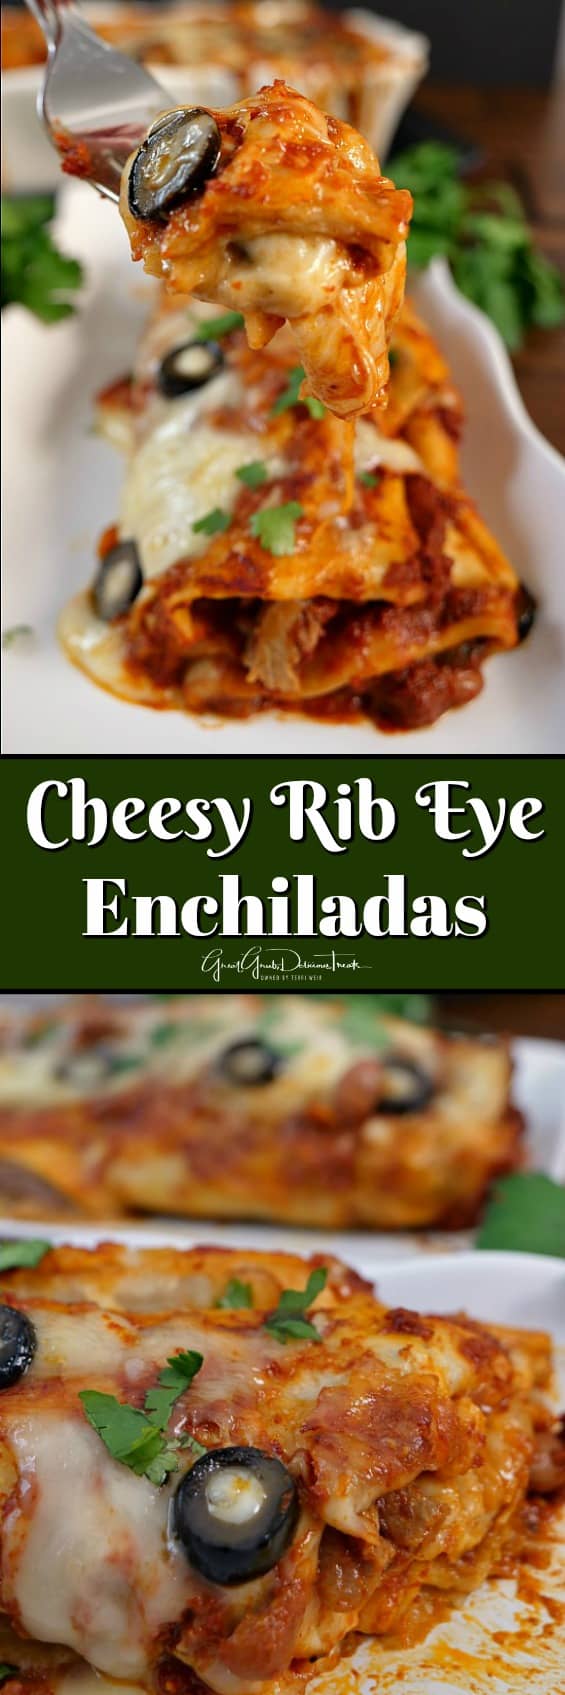 Cheesy Rib Eye Enchiladas